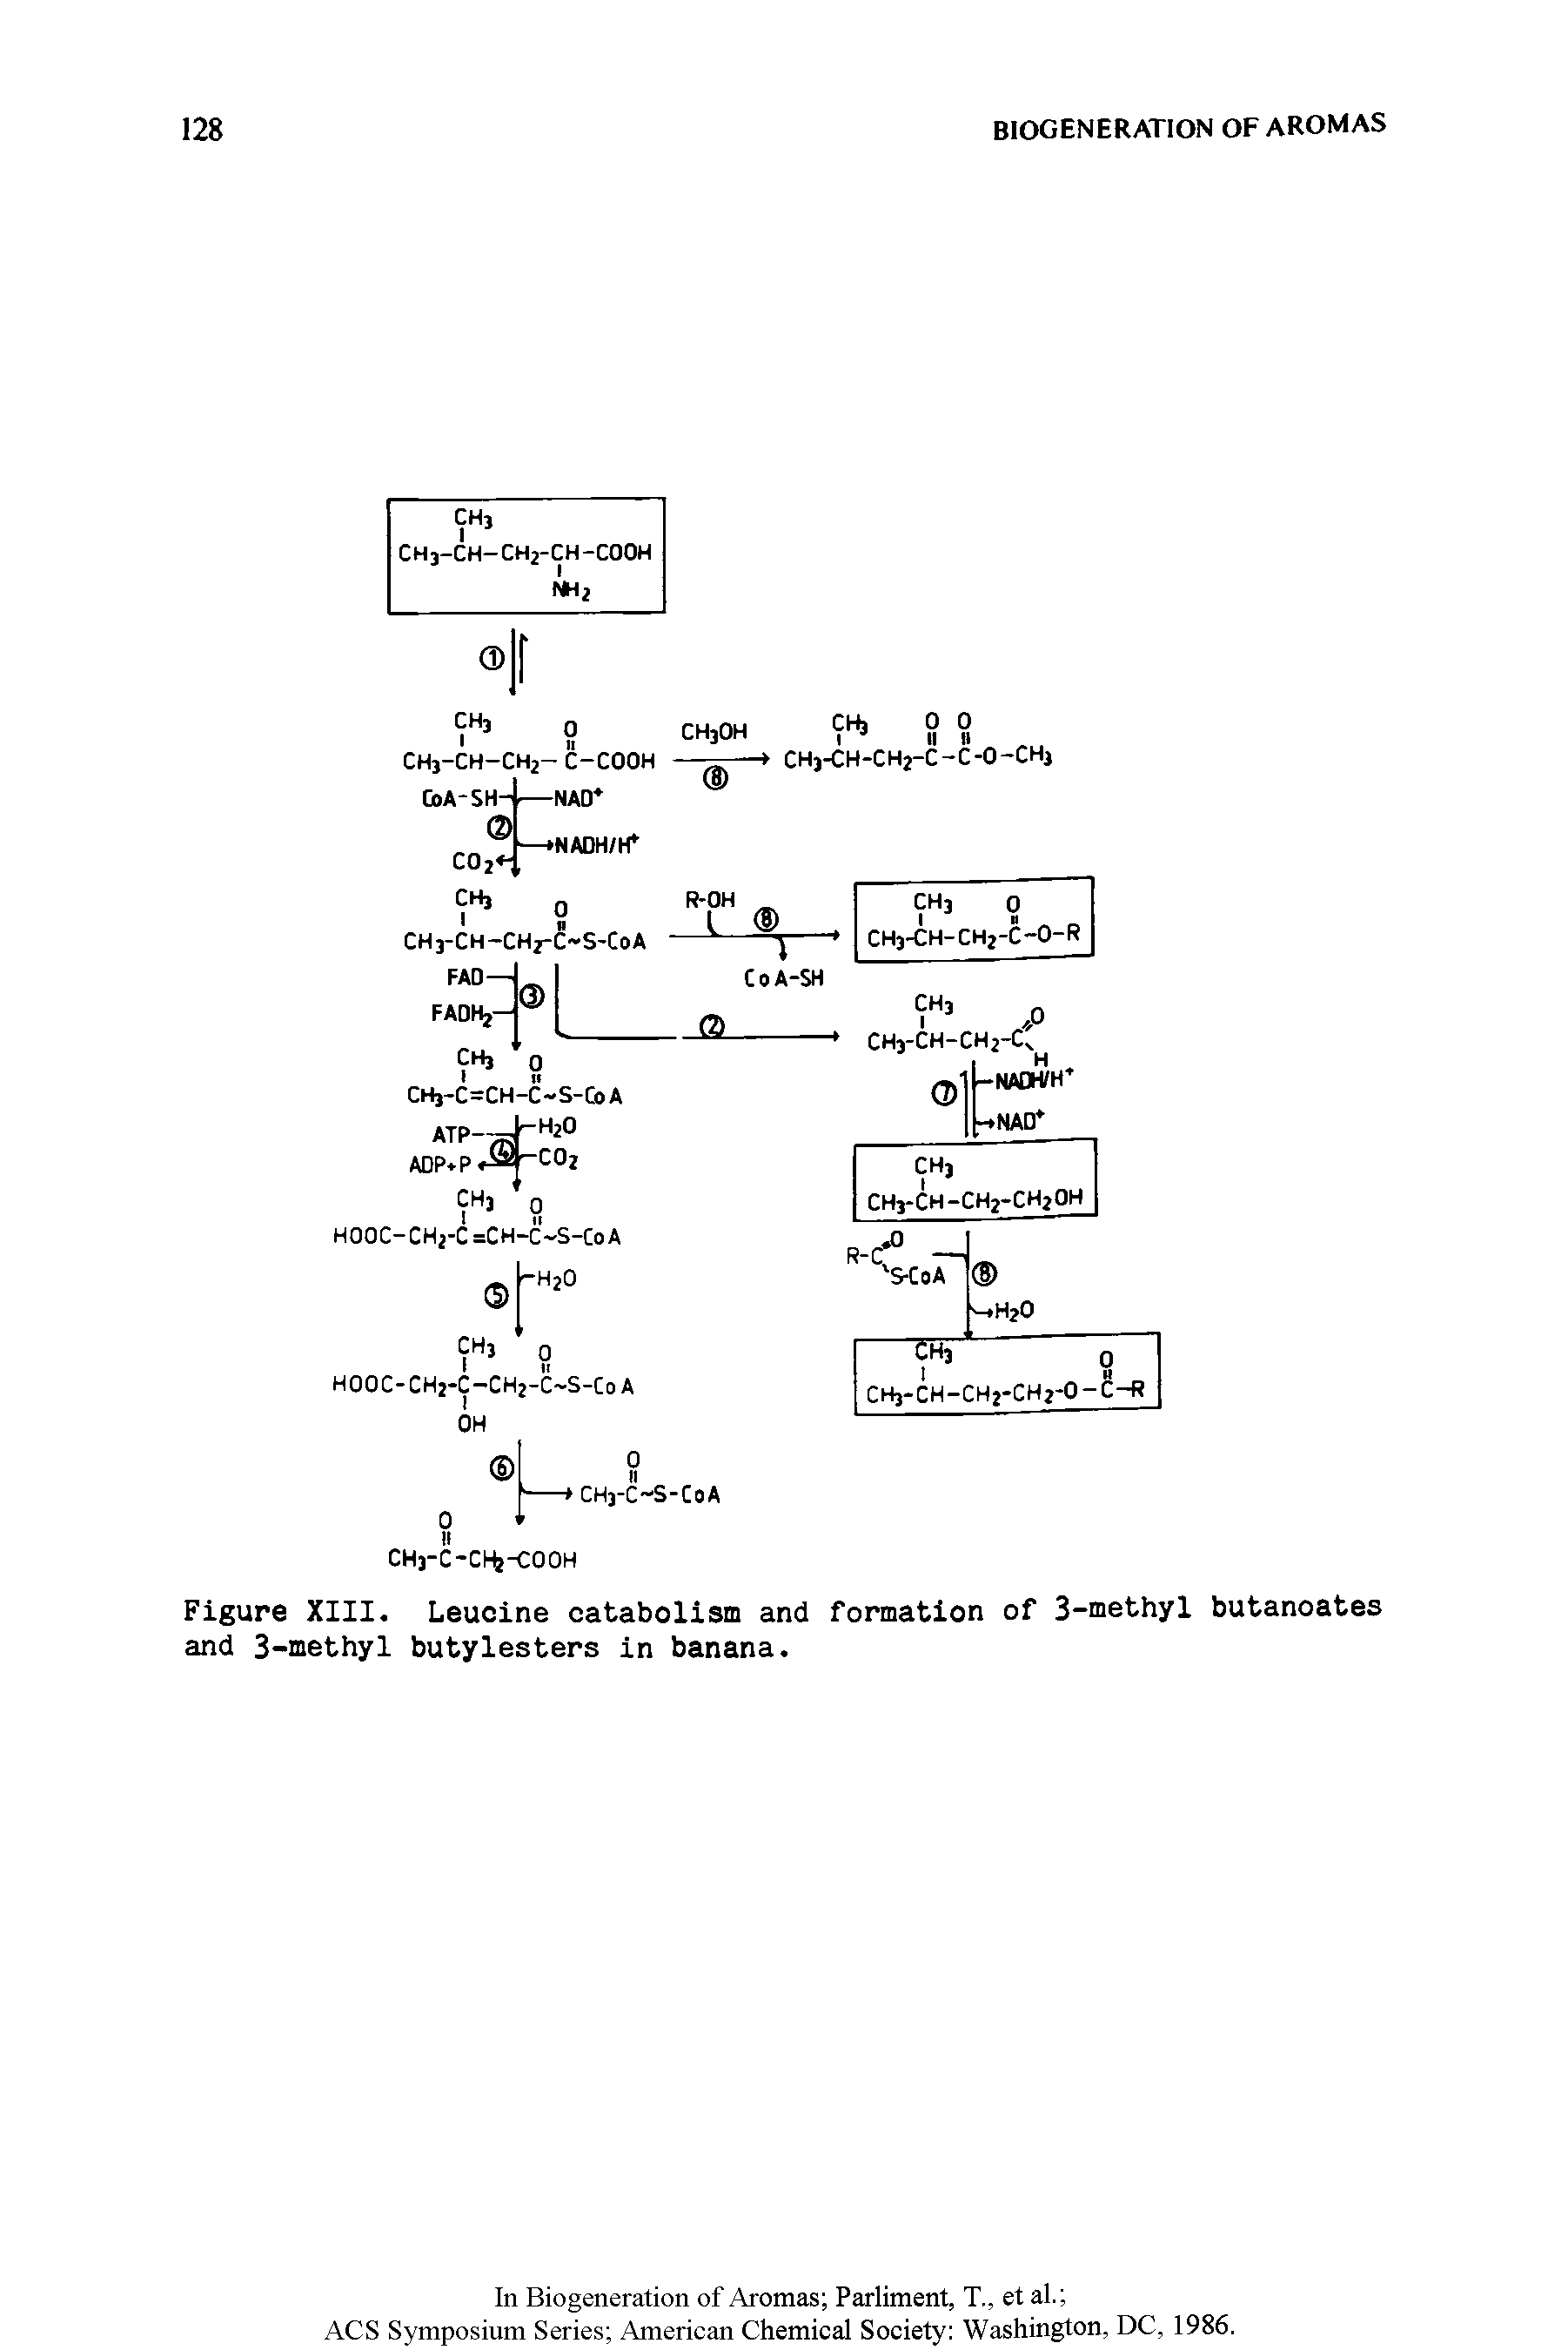 Figure XIII. Leucine catabolism and formation of 3-methyl butanoates and 3-methyl butylesters in banana.